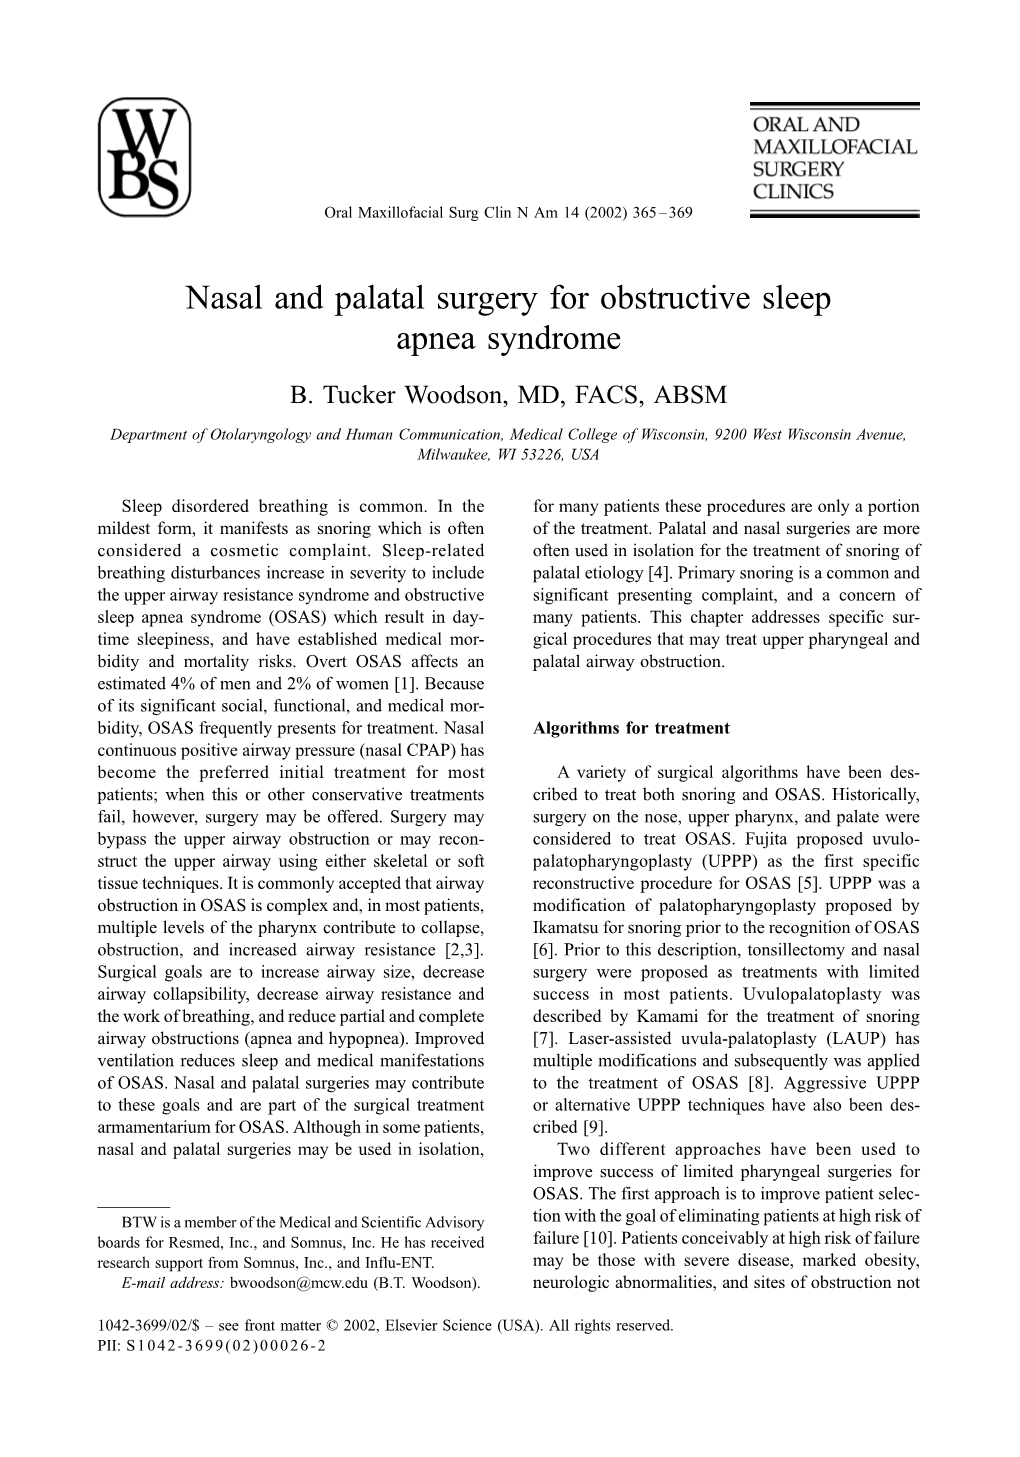 Nasal and Palatal Surgery for Obstructive Sleep Apnea Syndrome